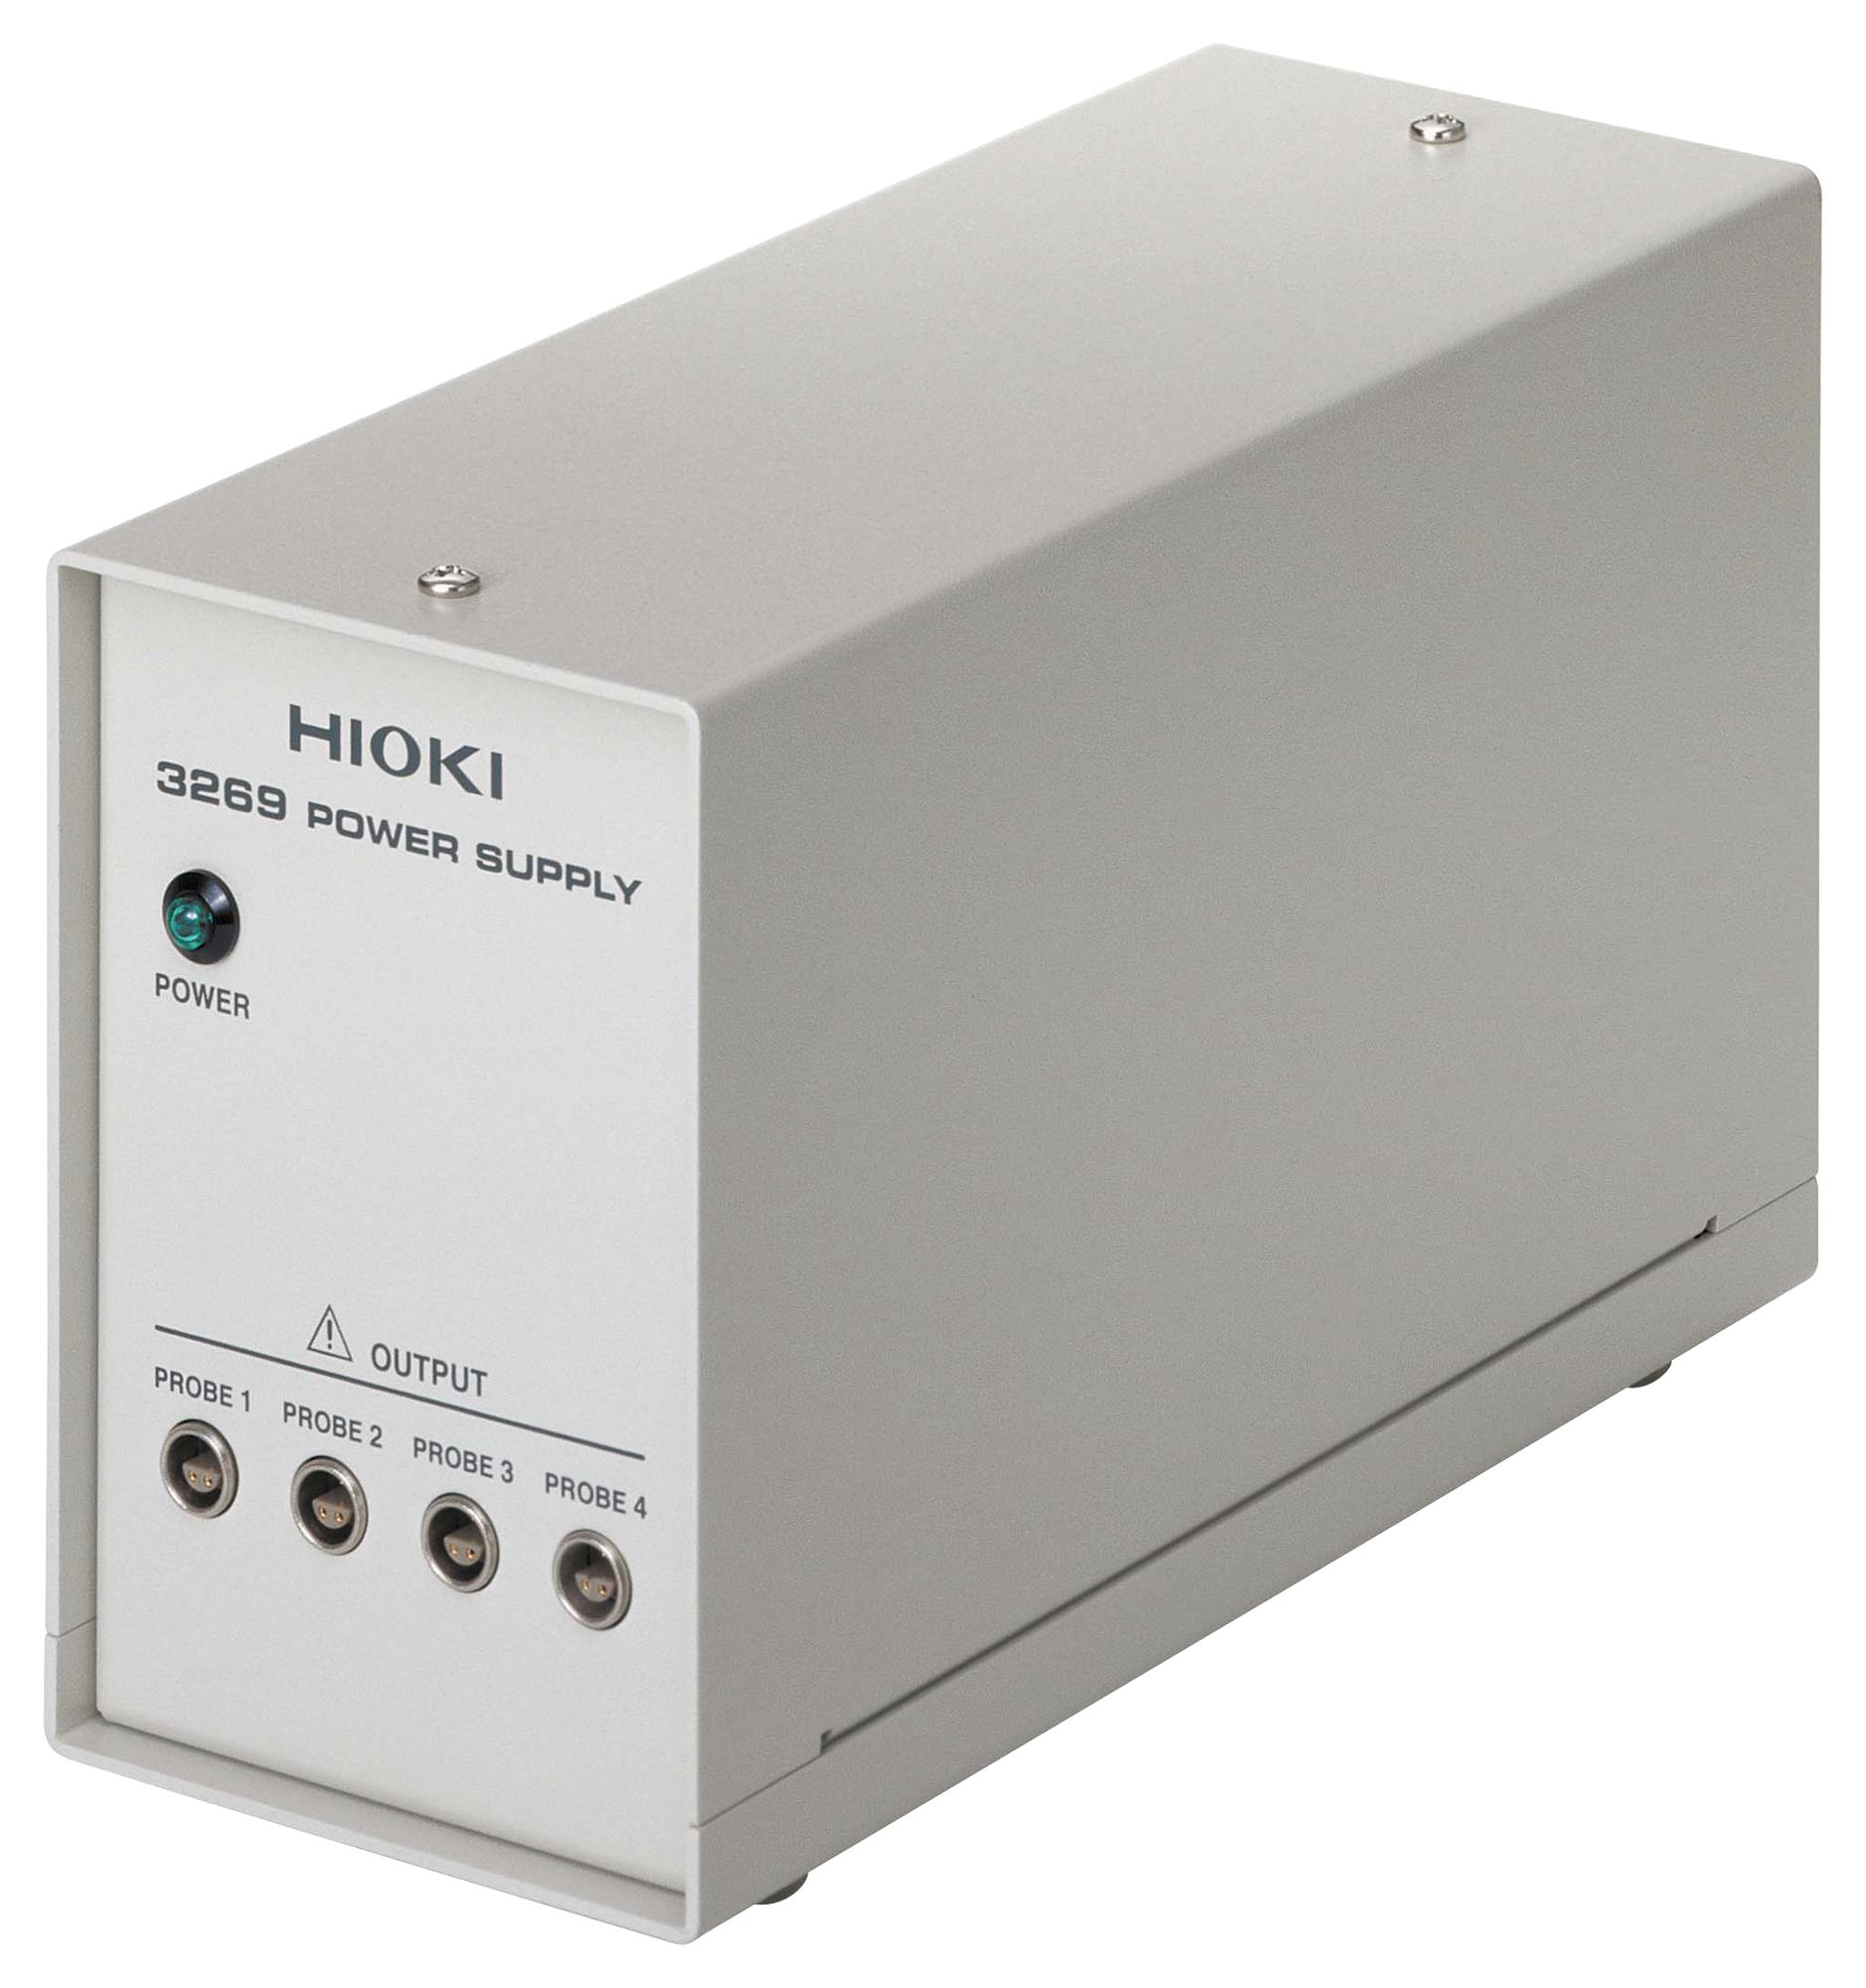 Hioki 3269 Power Supply Unit, Hicorder/oscilloscope